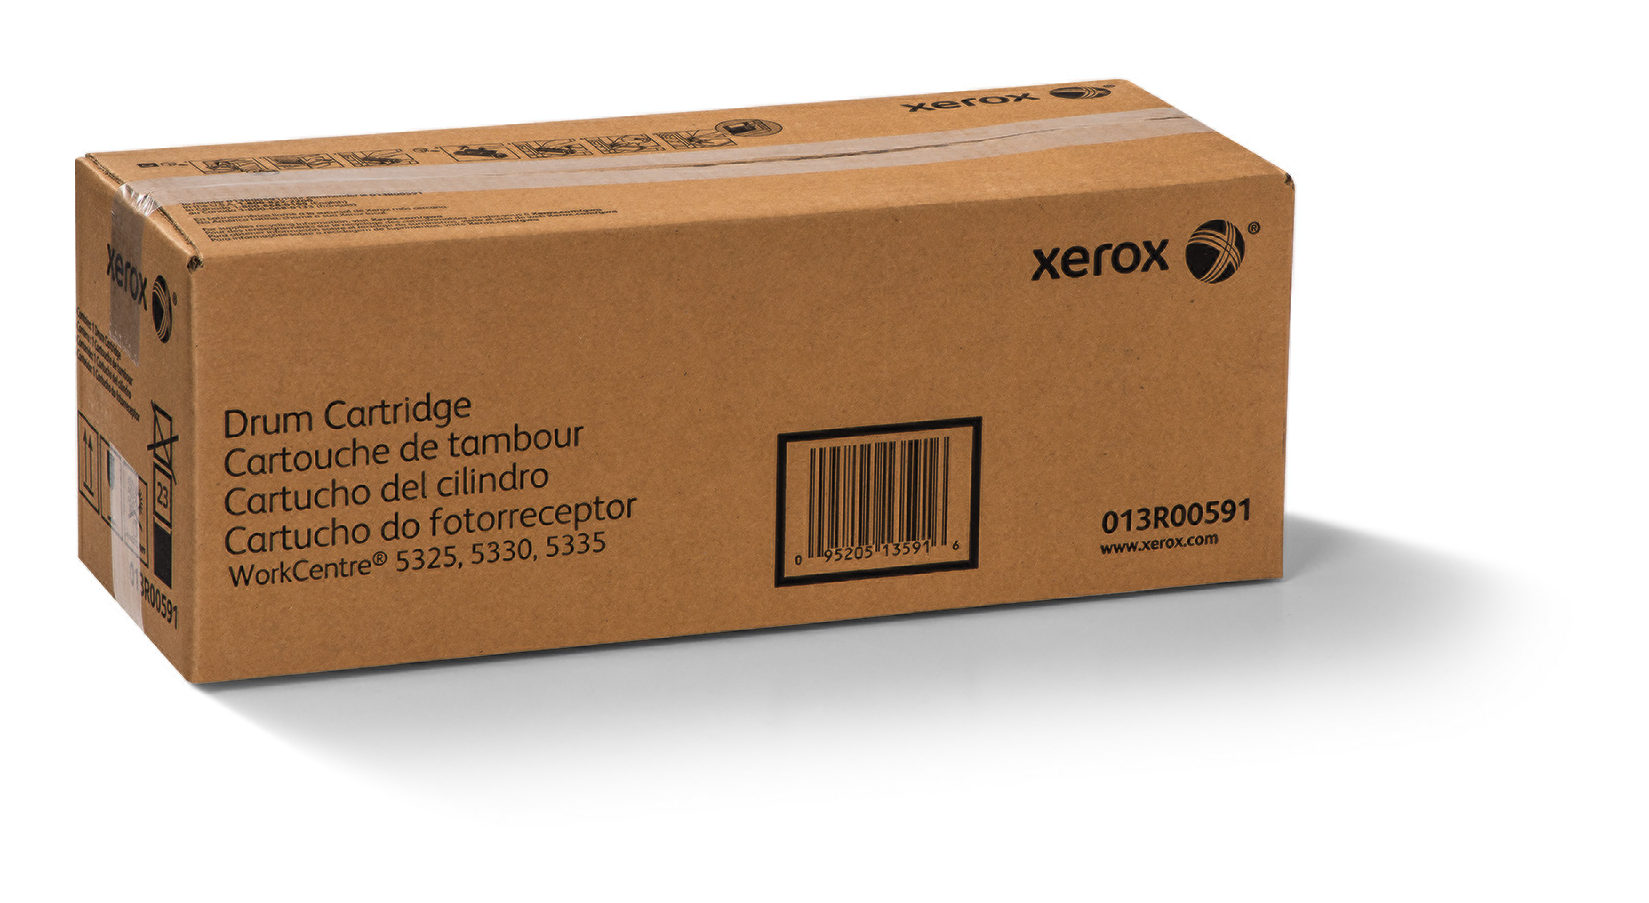 Black Drum Cartridge 013R00591 Genuine Xerox Supplies